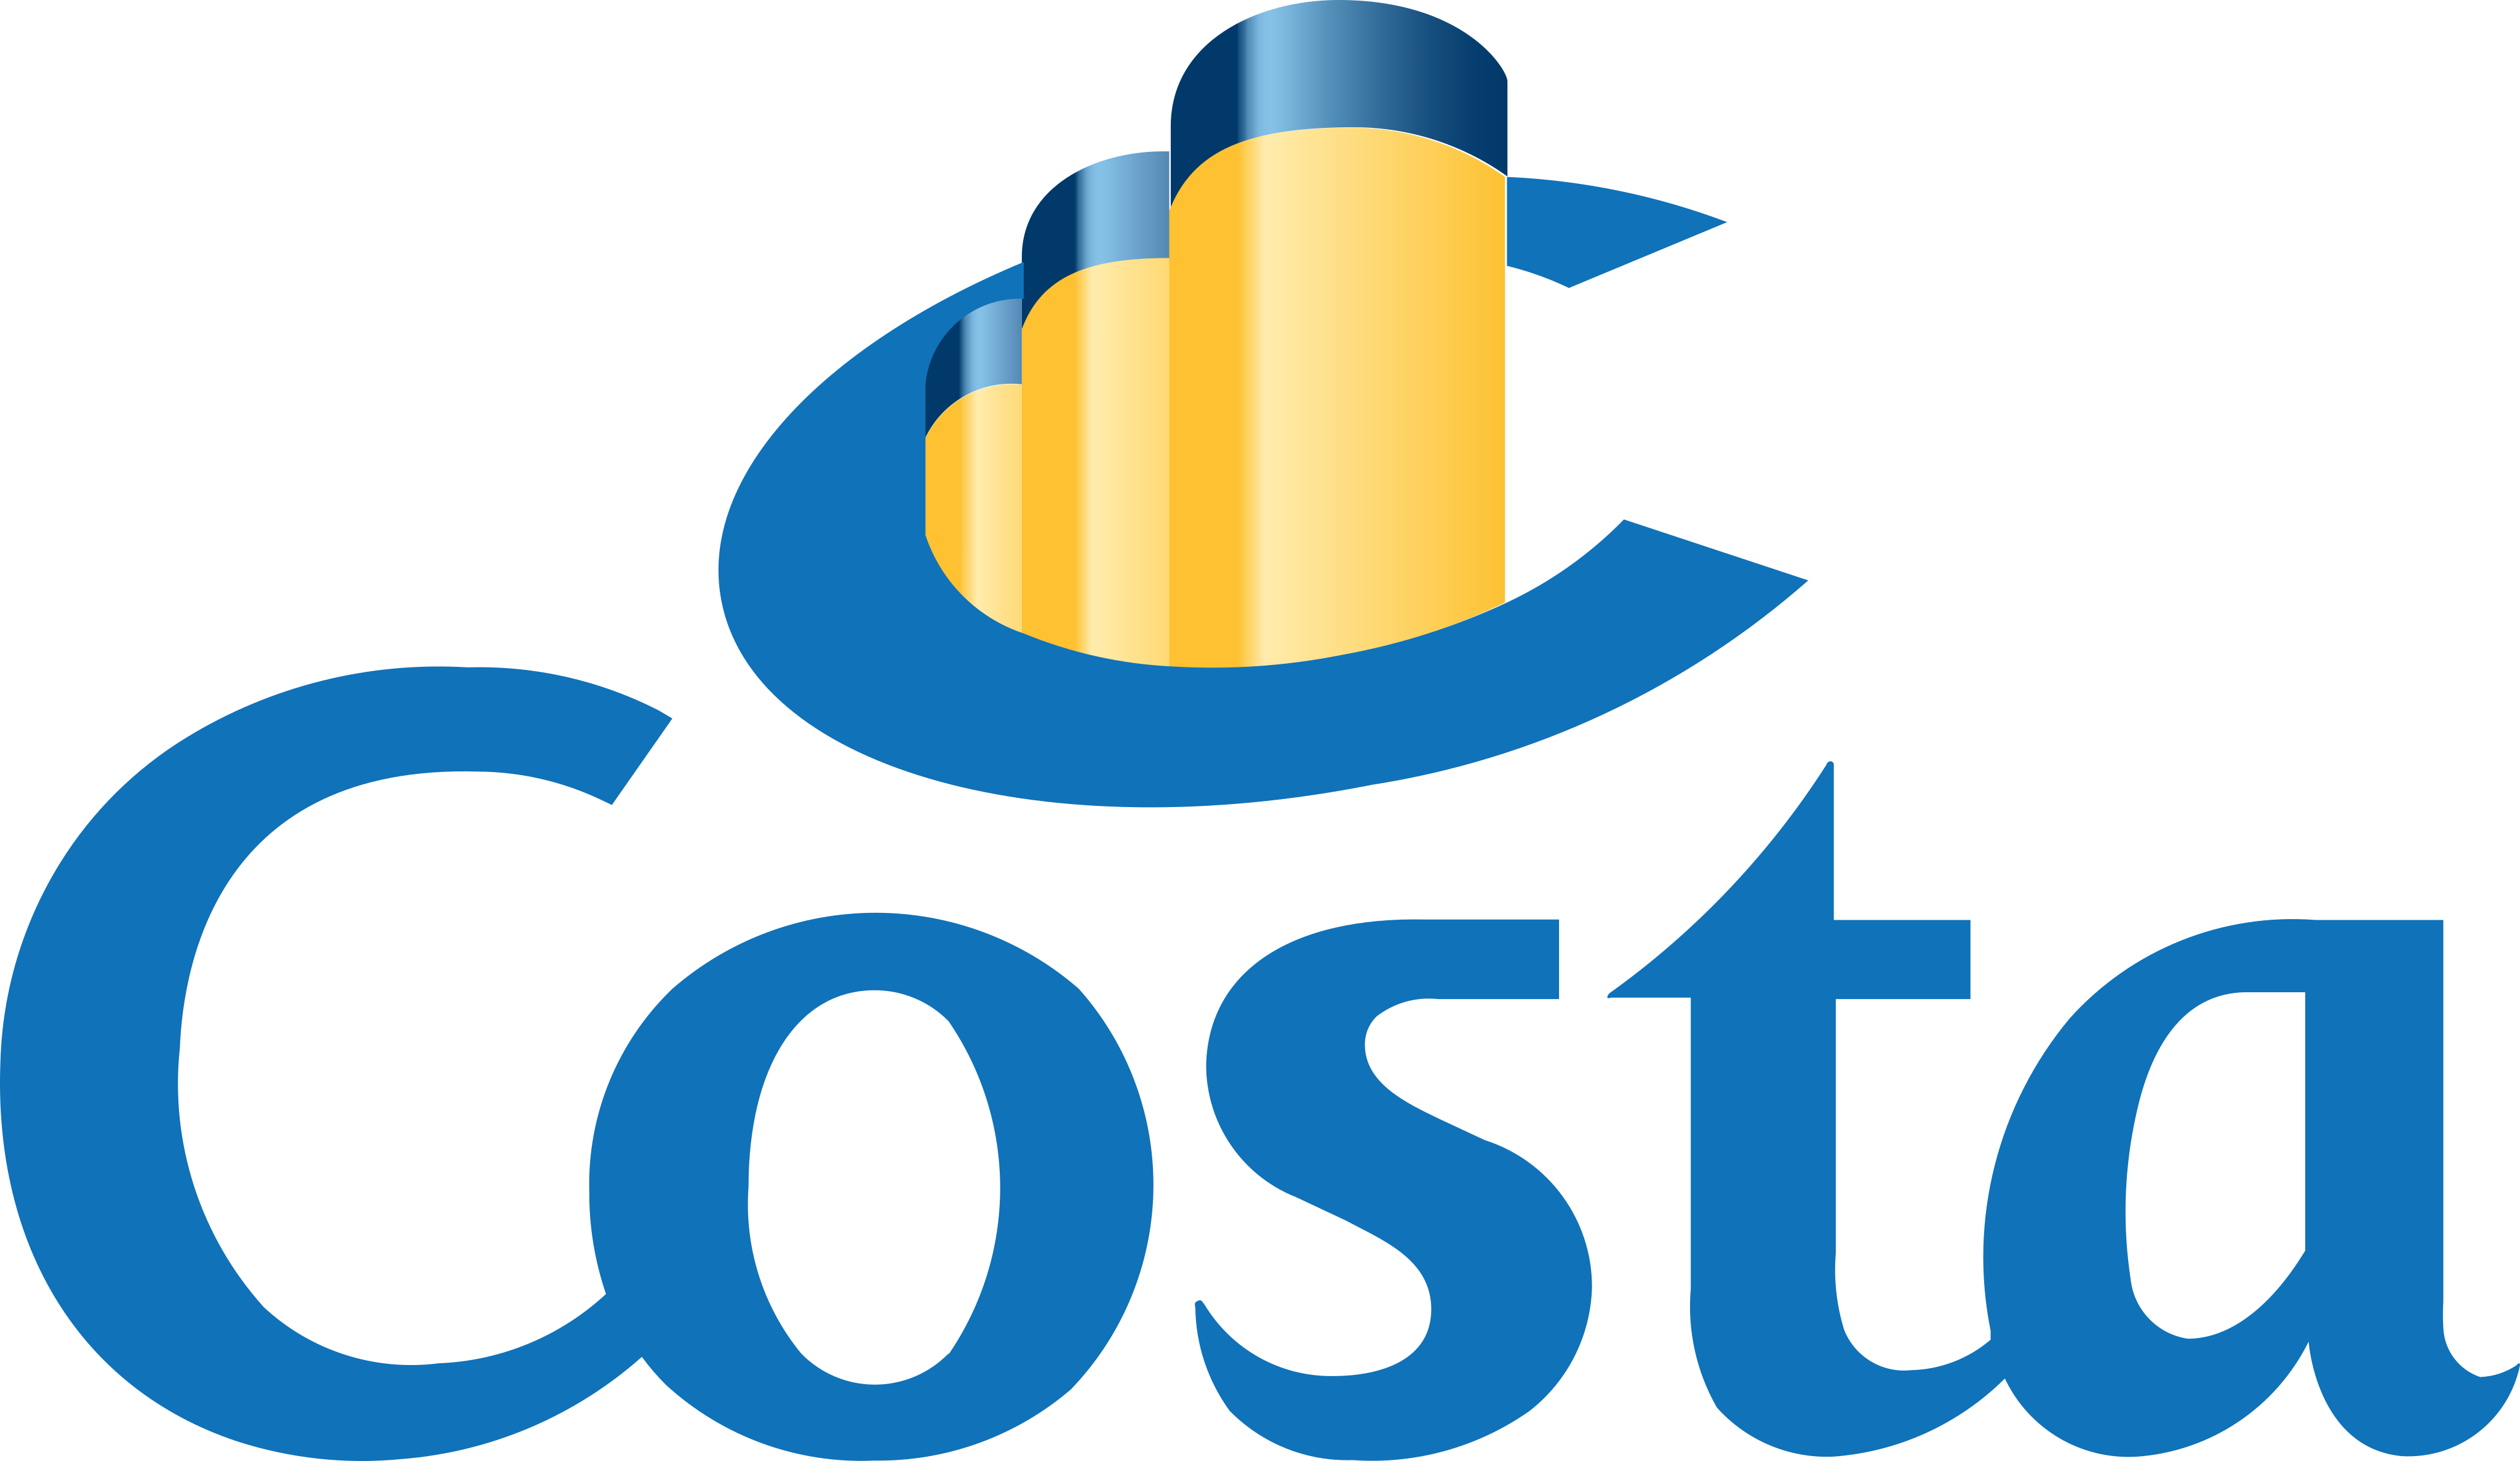 costa crociere logo - Costa Cruises Logo